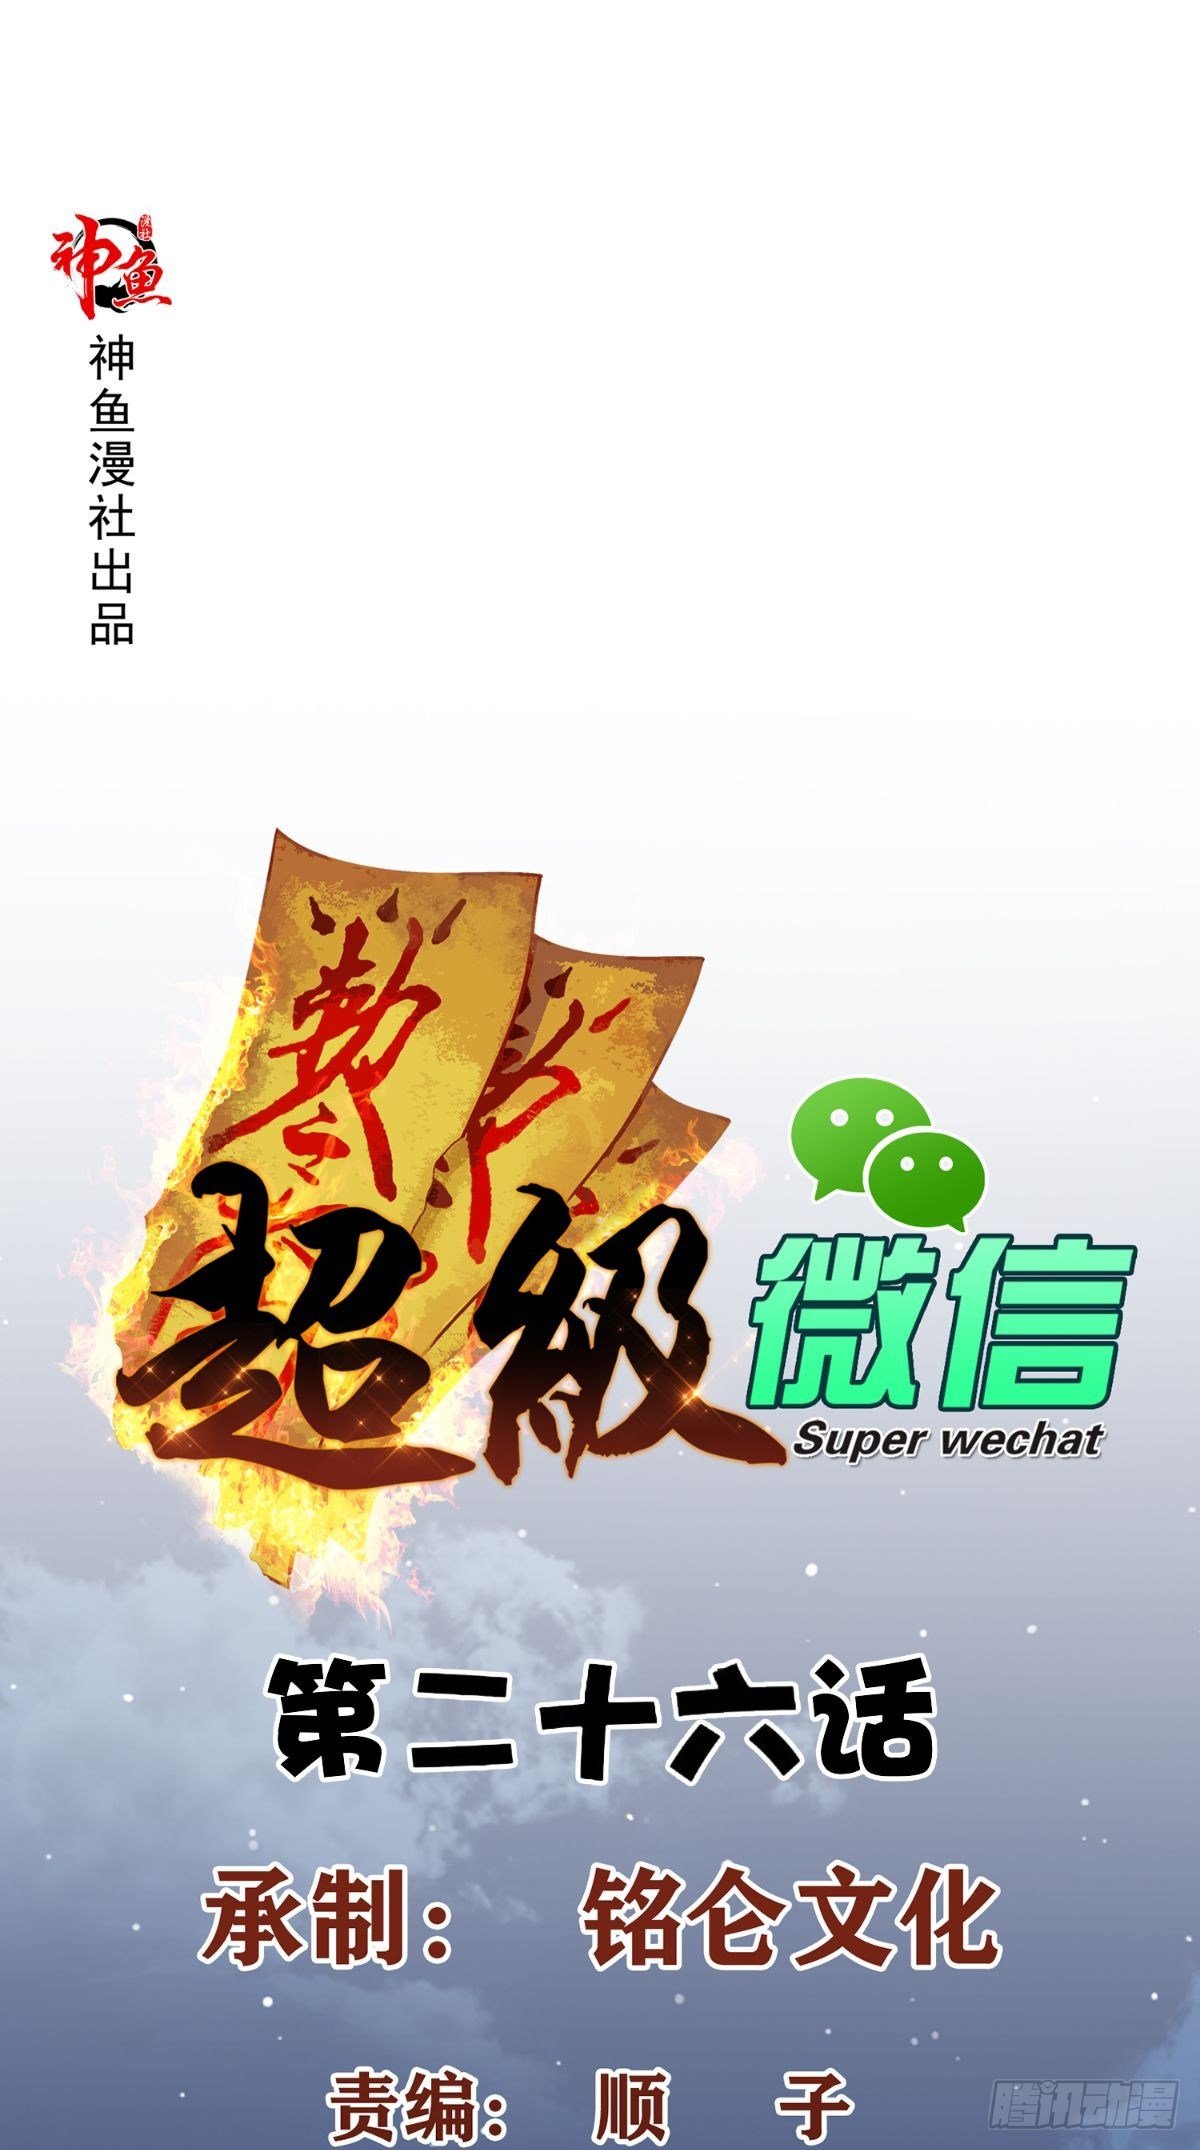 Super WeChat Chapter 26